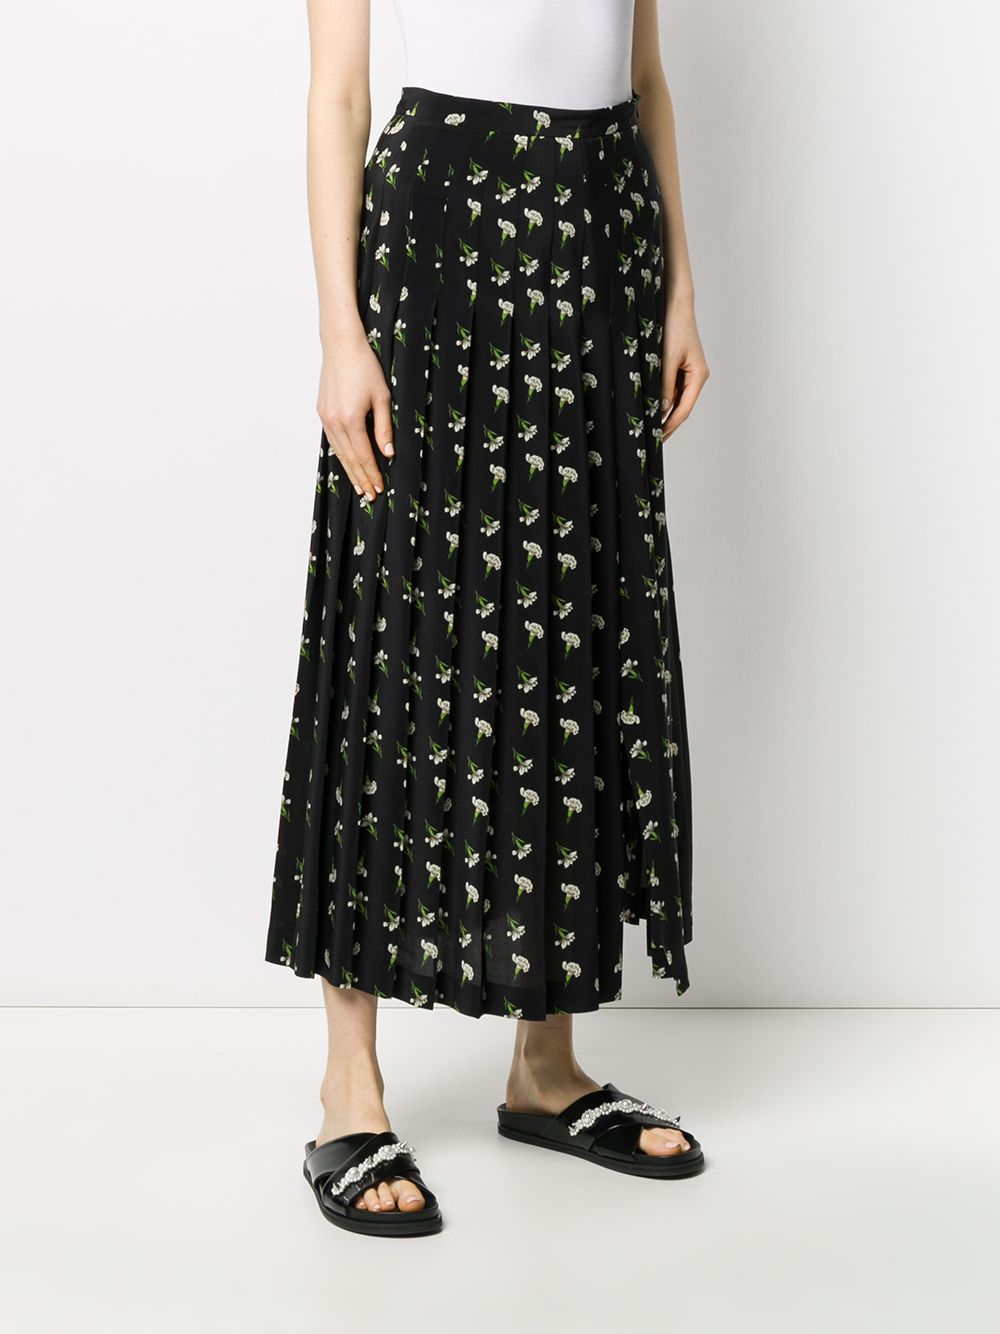 Giambattista Valli Floral Pleated Skirt - Farfetch